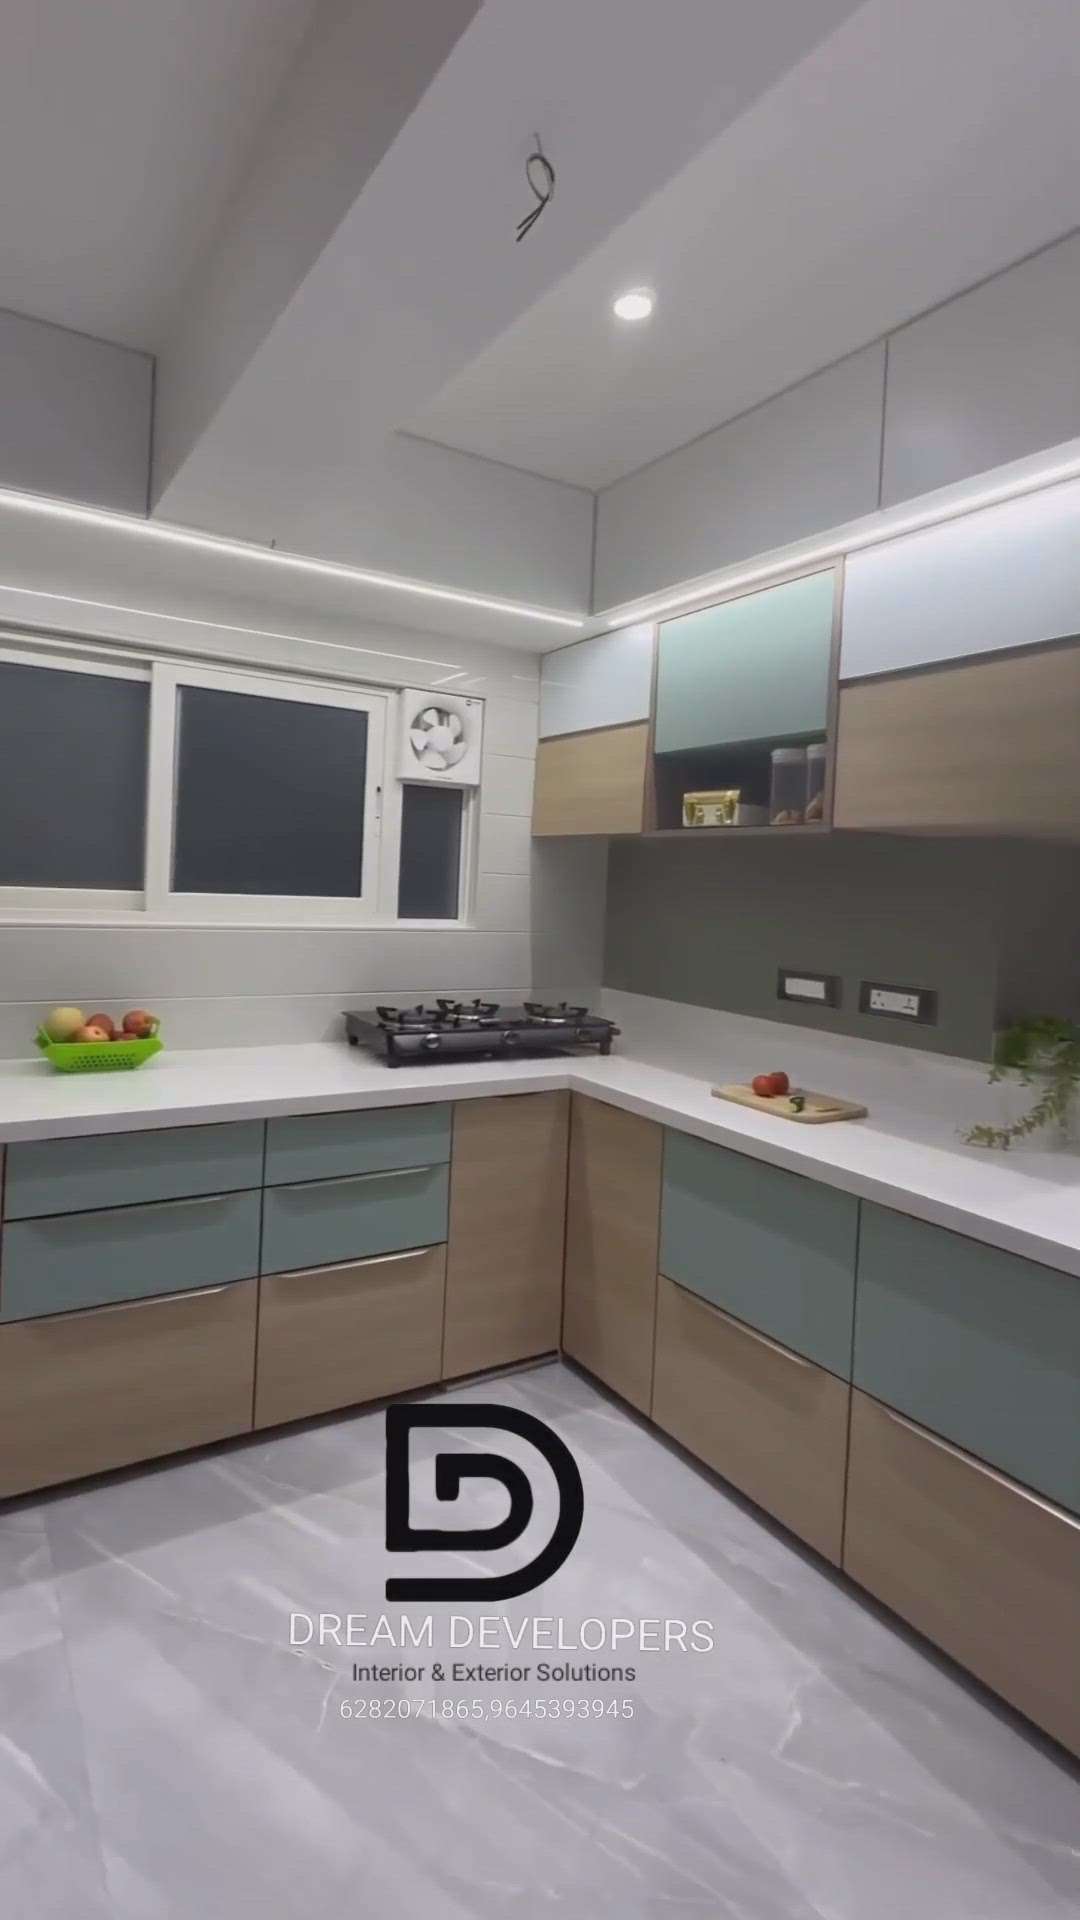 new model modular kitchen
 #ModularKitchen #InteriorDesigner  #KitchenIdeas #KitchenInterior #homeinteriors #KitchenRenovation #ClosedKitchen #OpenKitchnen